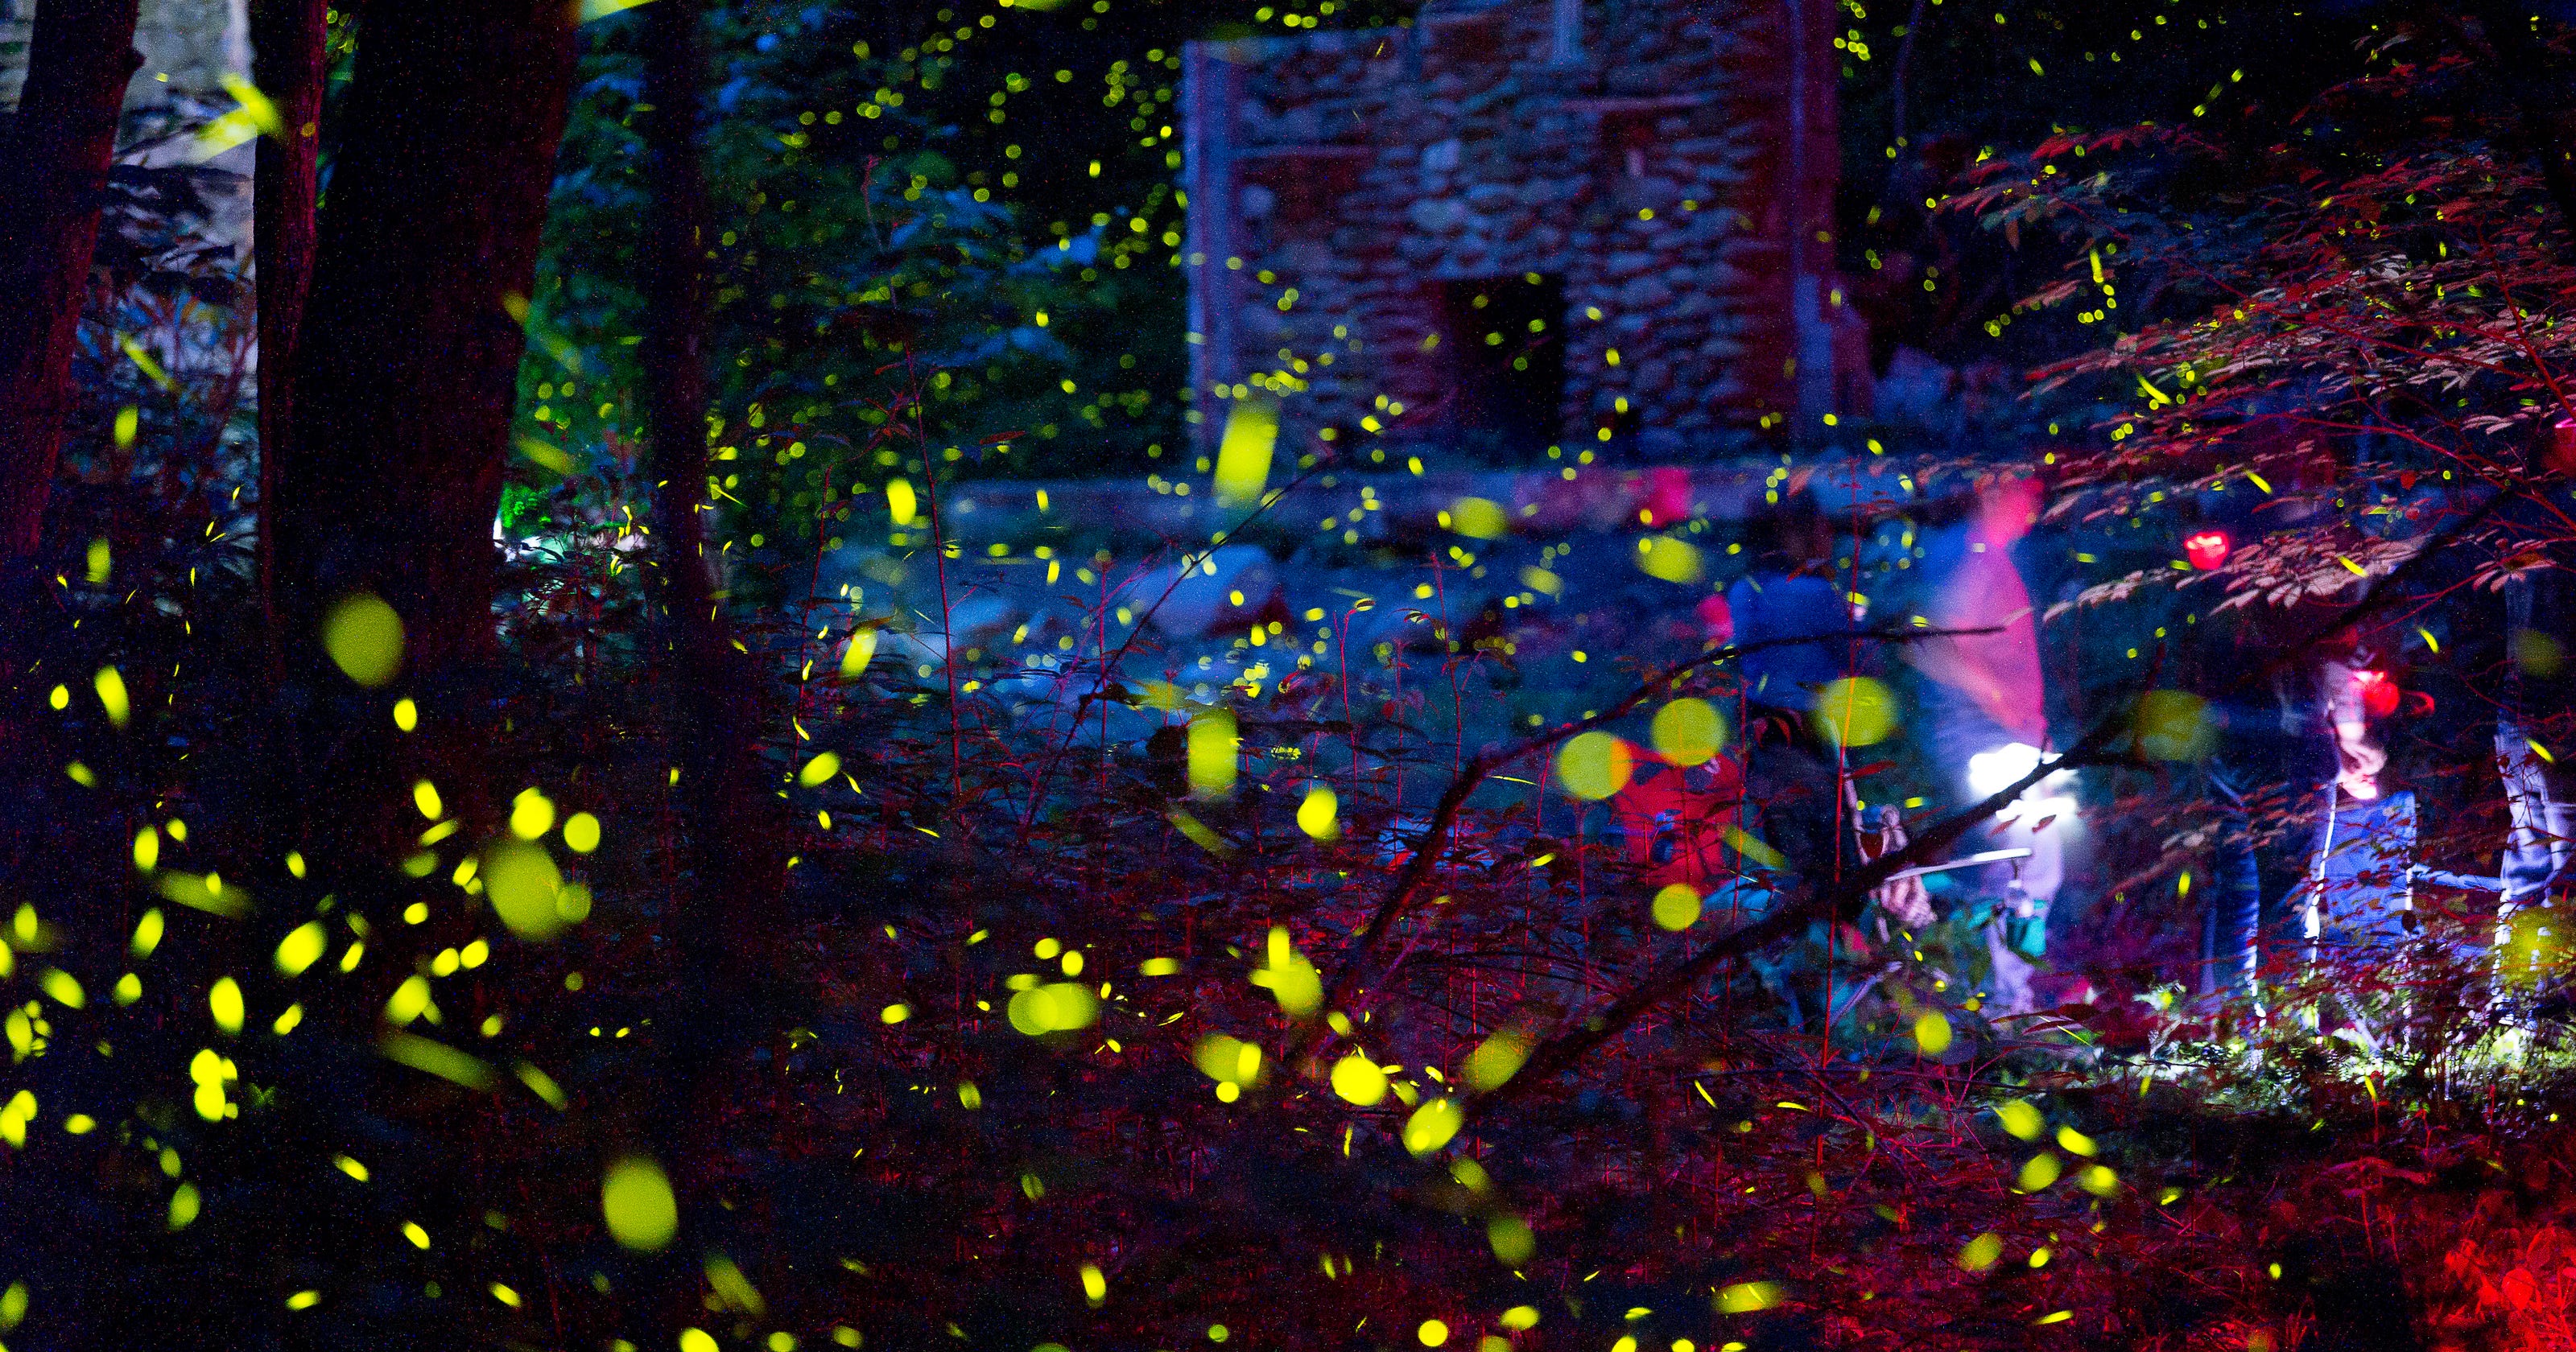 Synchronous fireflies light up Great Smoky Mountains like magic